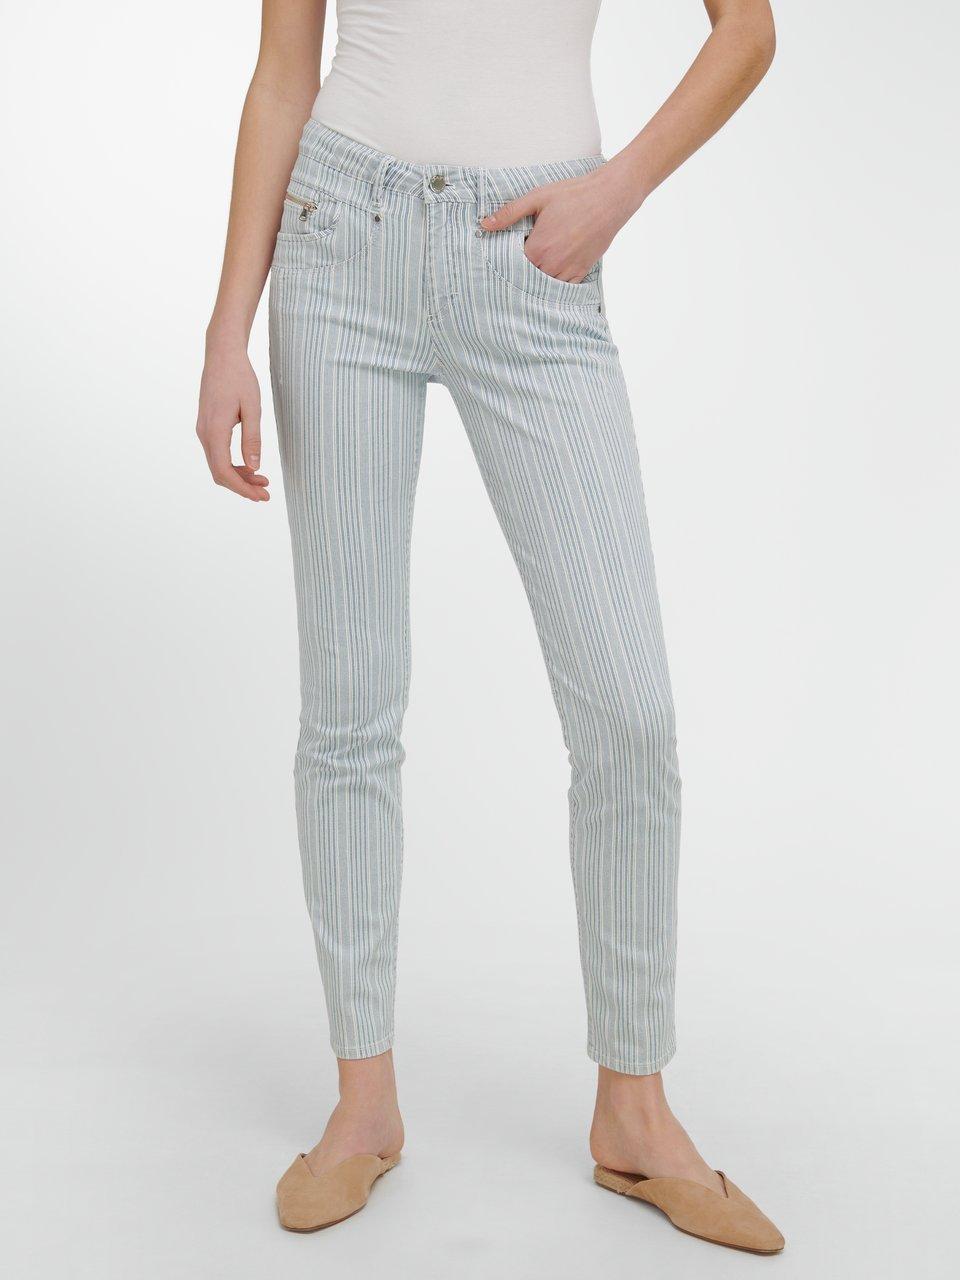 Kustlijn Informeer Canberra Brax Feel Good - Enkellange skinny jeans model Shakira S - blauw/wit